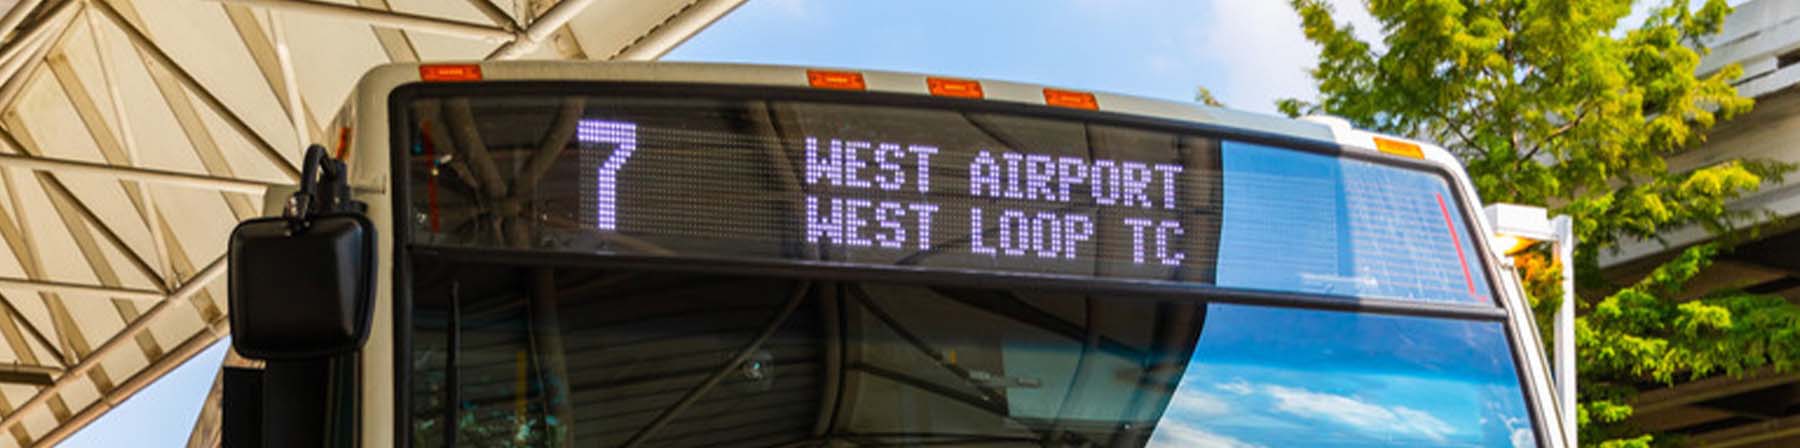 7 West Airport Reader Board